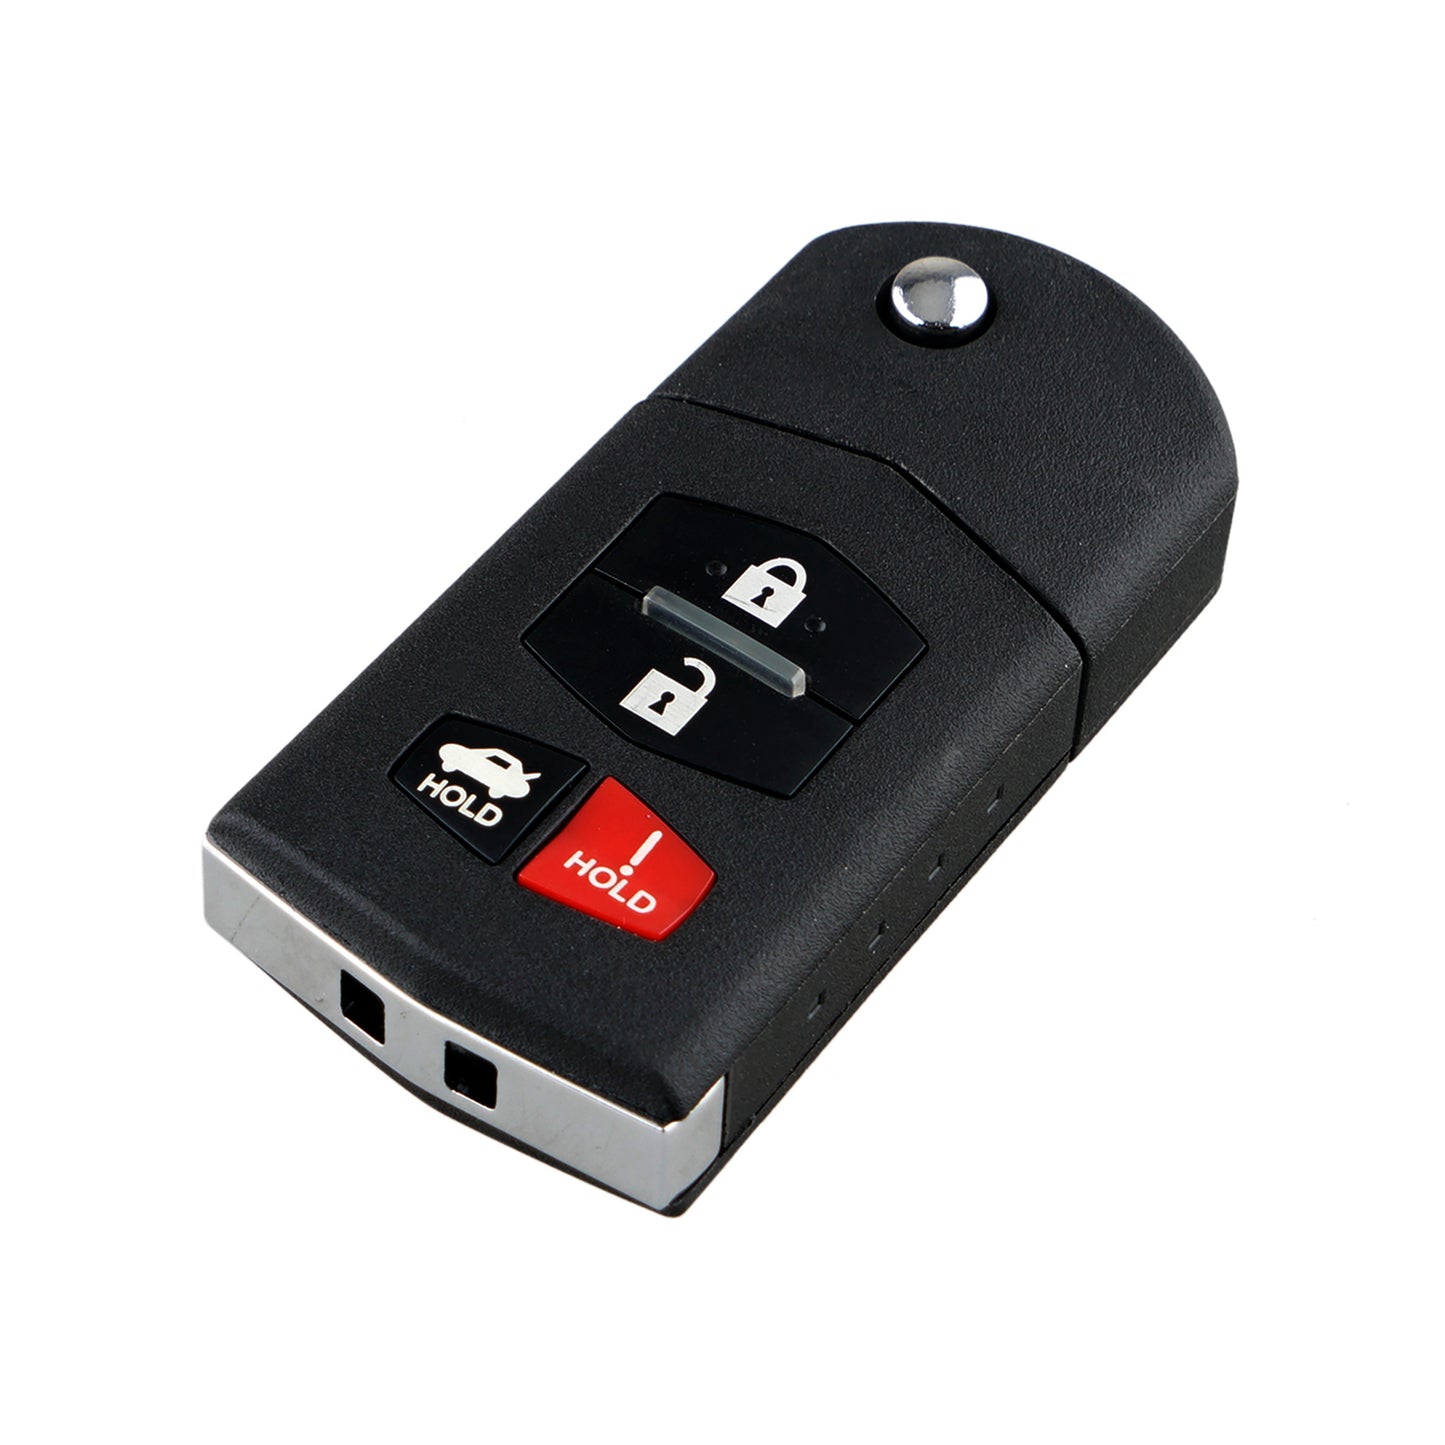 4 Buttons 315MHz Keyless Entry Fob Remote Car Key For 2006 - 2015 Mazda MX-5 Miata 3 Speed 3 6FCC ID: BGBX1T478SKE125-01 SKU : J079